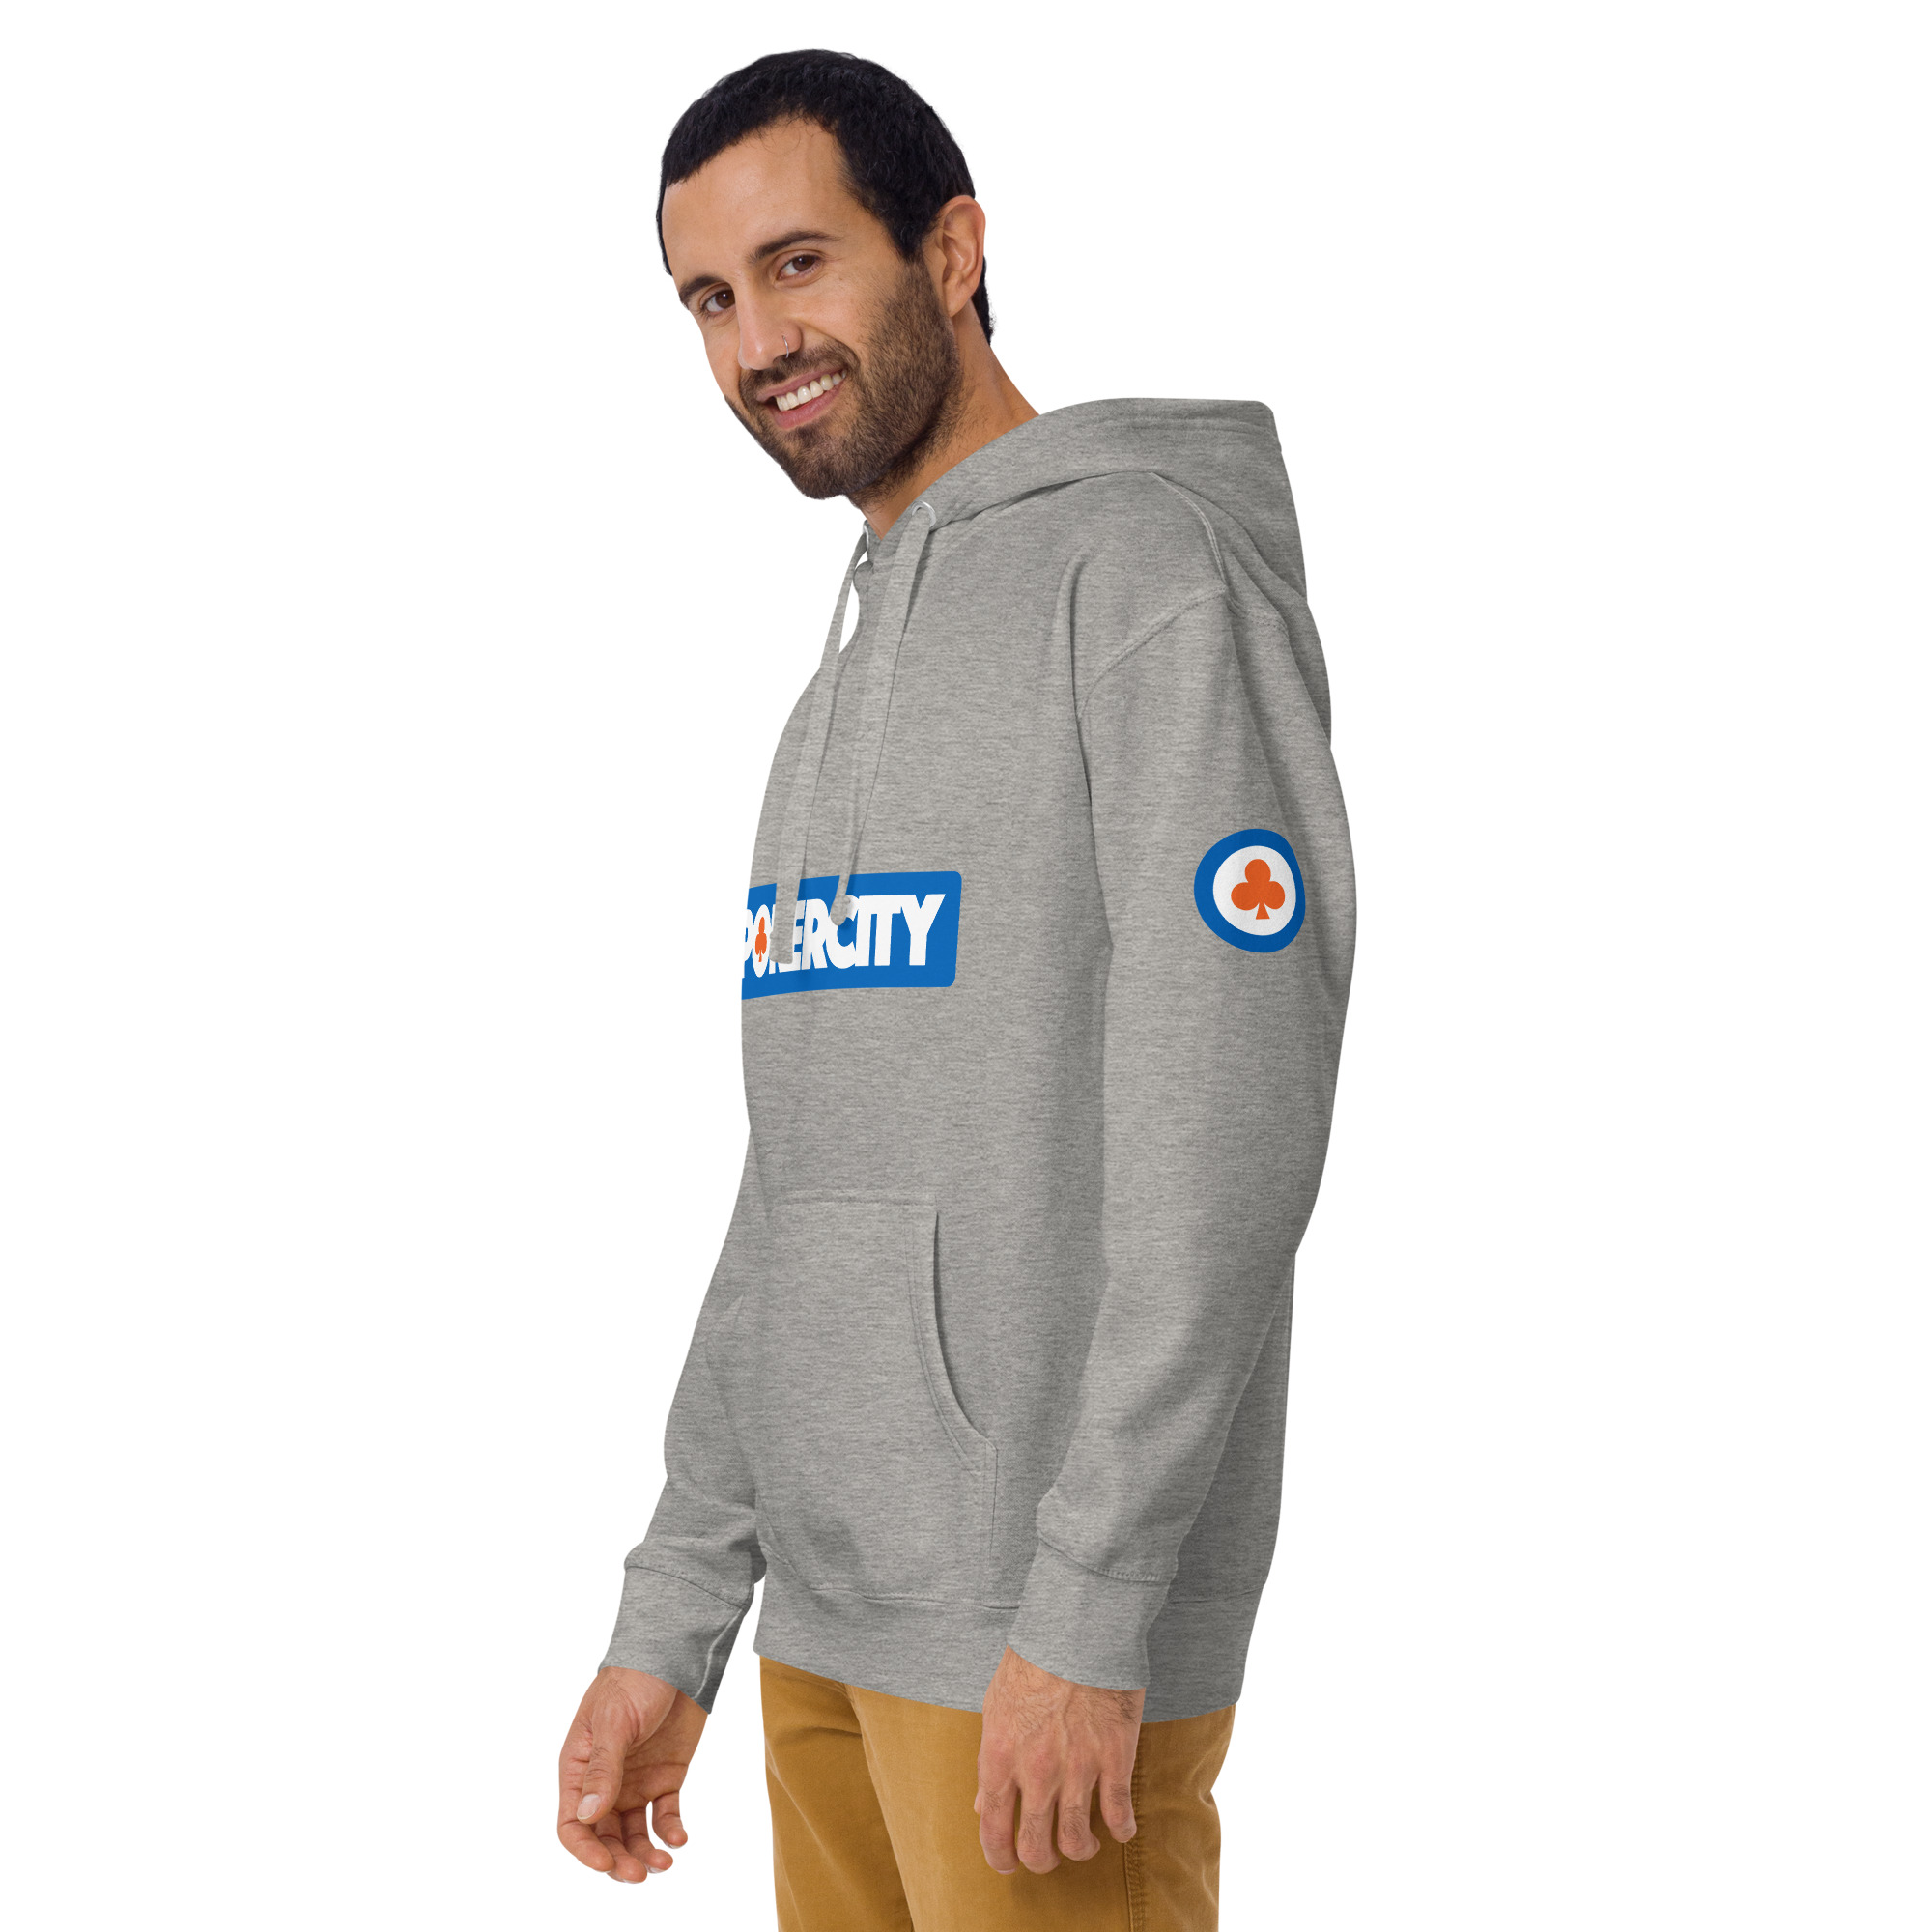 unisex-premium-hoodie-carbon-grey-left-front-62d14fb134251.jpg